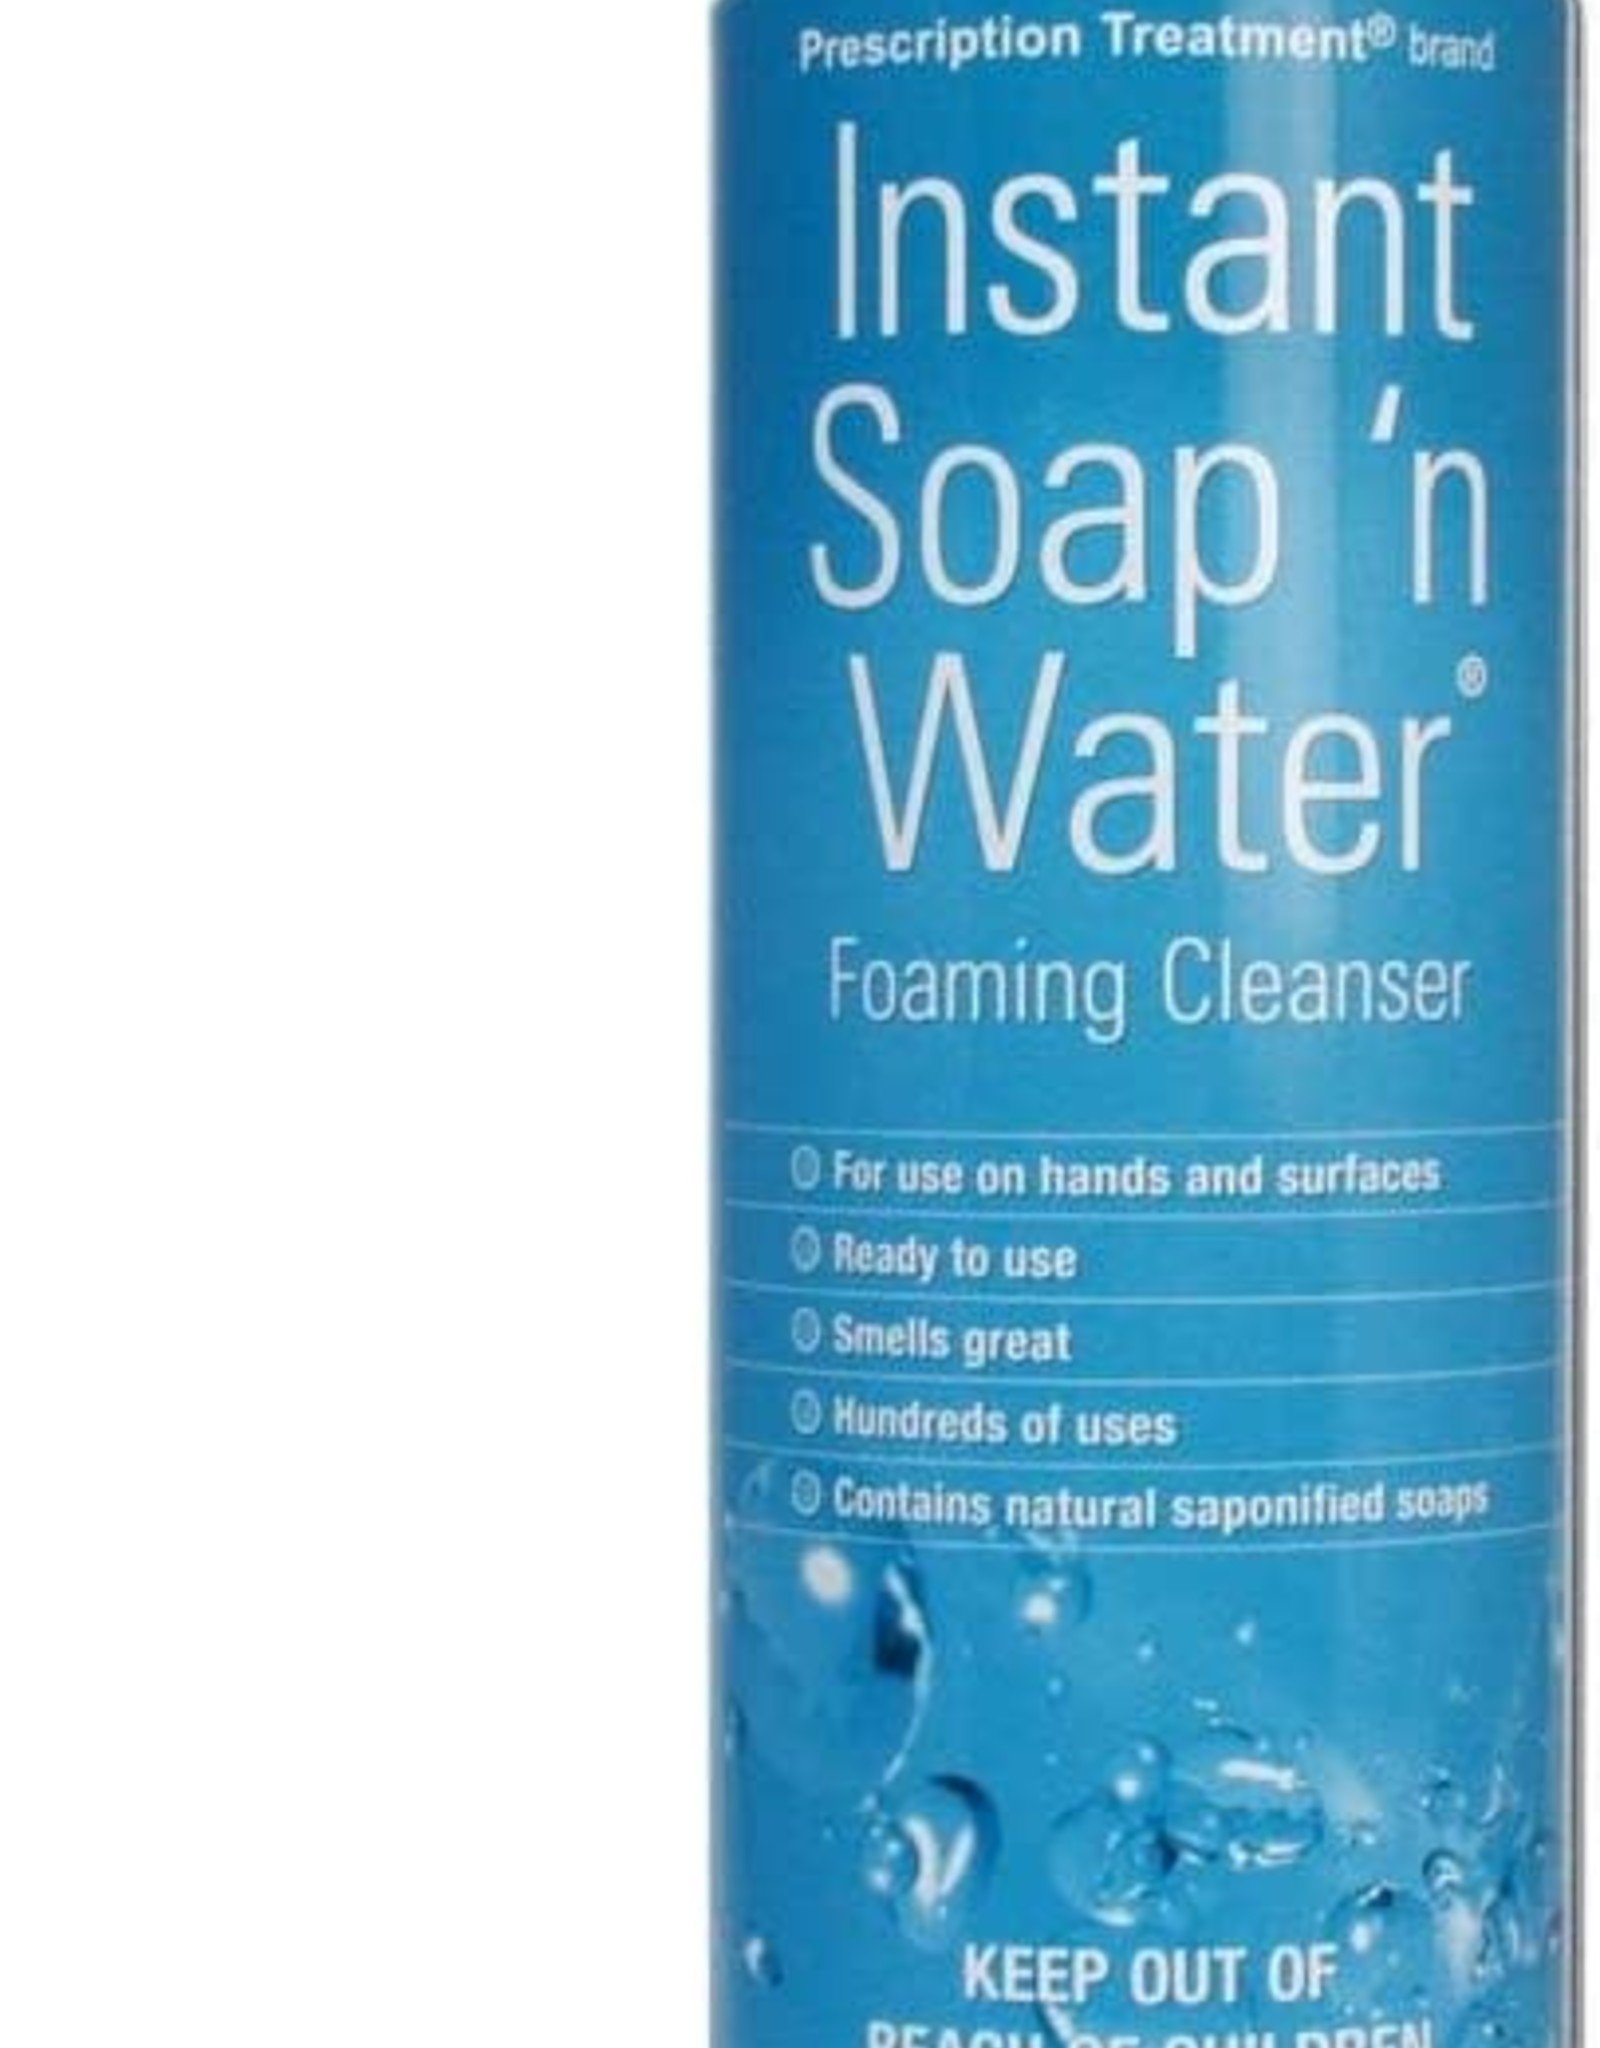 INSTANT SOAP 'N WATER FOAMING CLEANSER 9-OZ